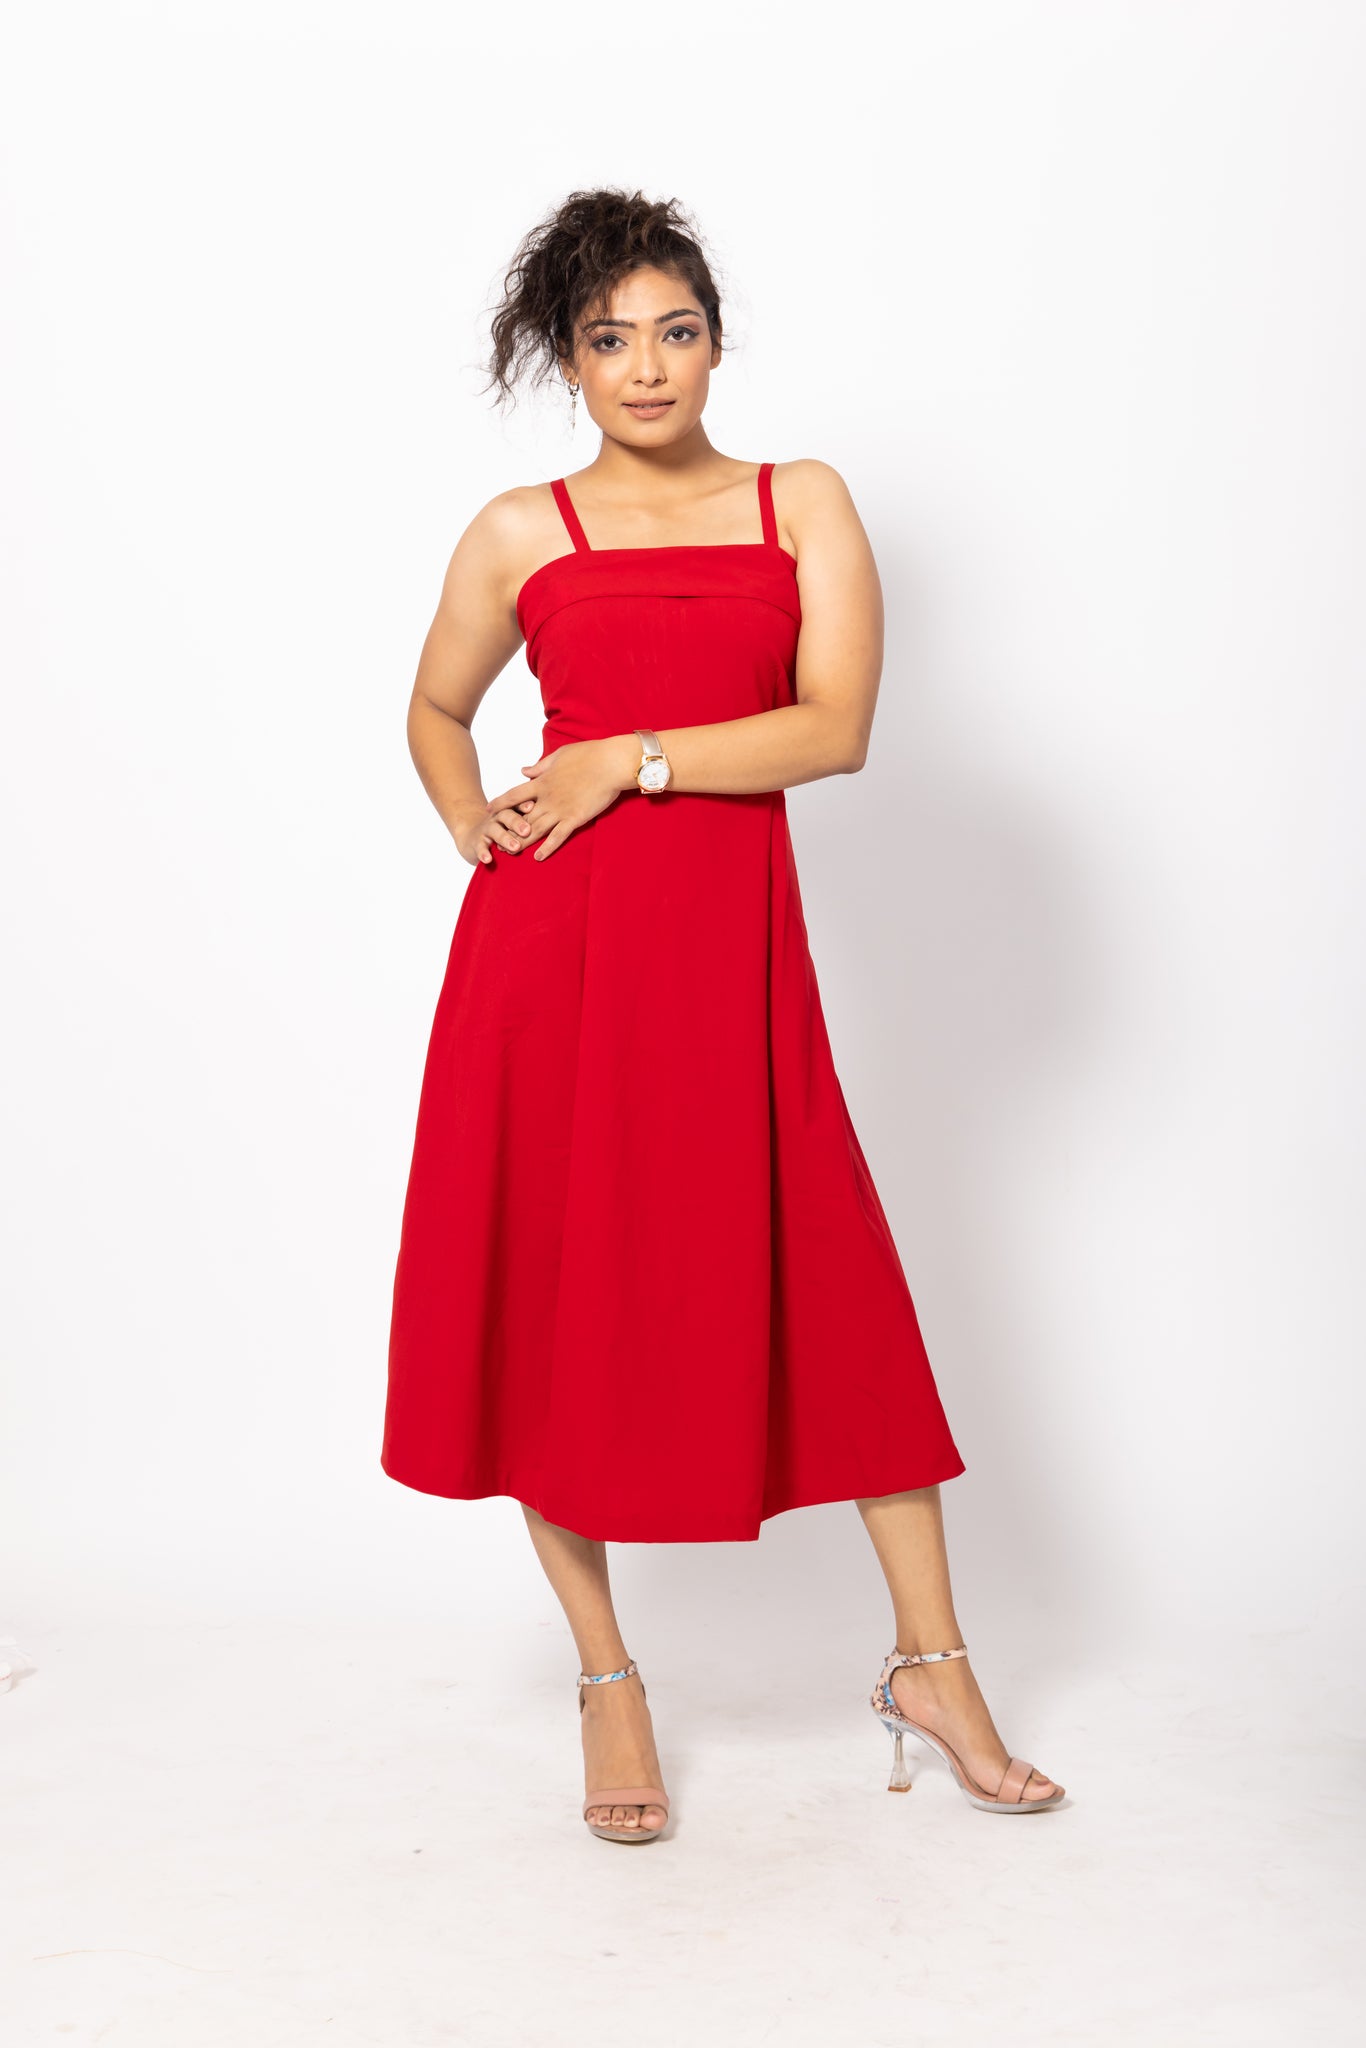 Buy Red Off Shoulder Short Dress Online - Label Ritu Kumar India Store View